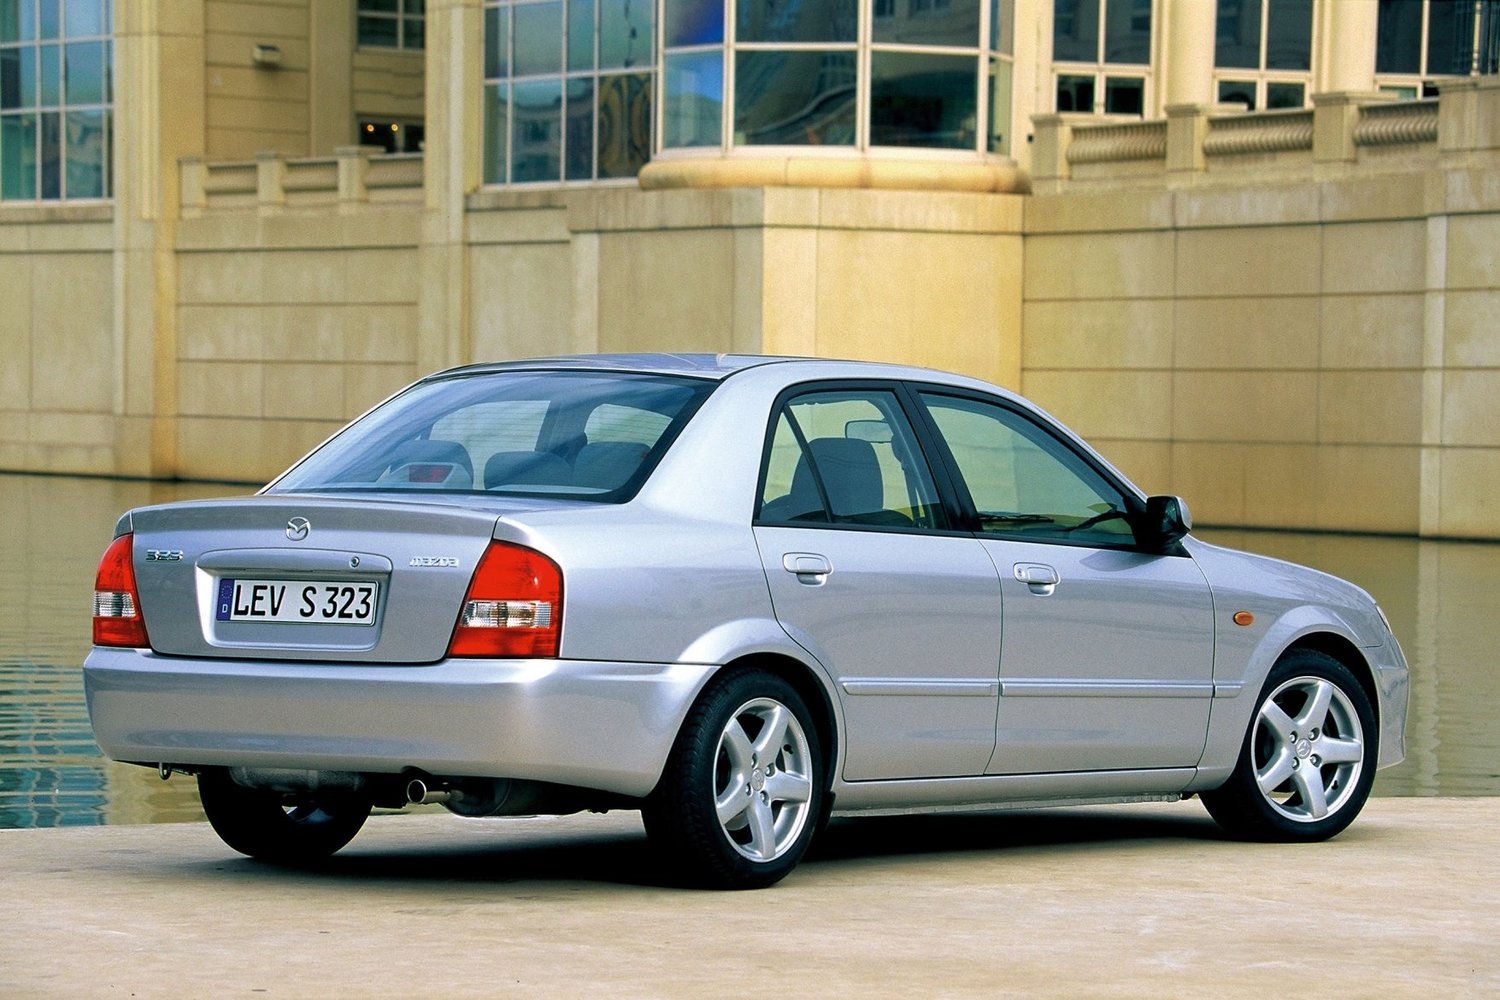 седан Mazda 323 2000 - 2003г выпуска модификация 1.3 MT (73 л.с.)